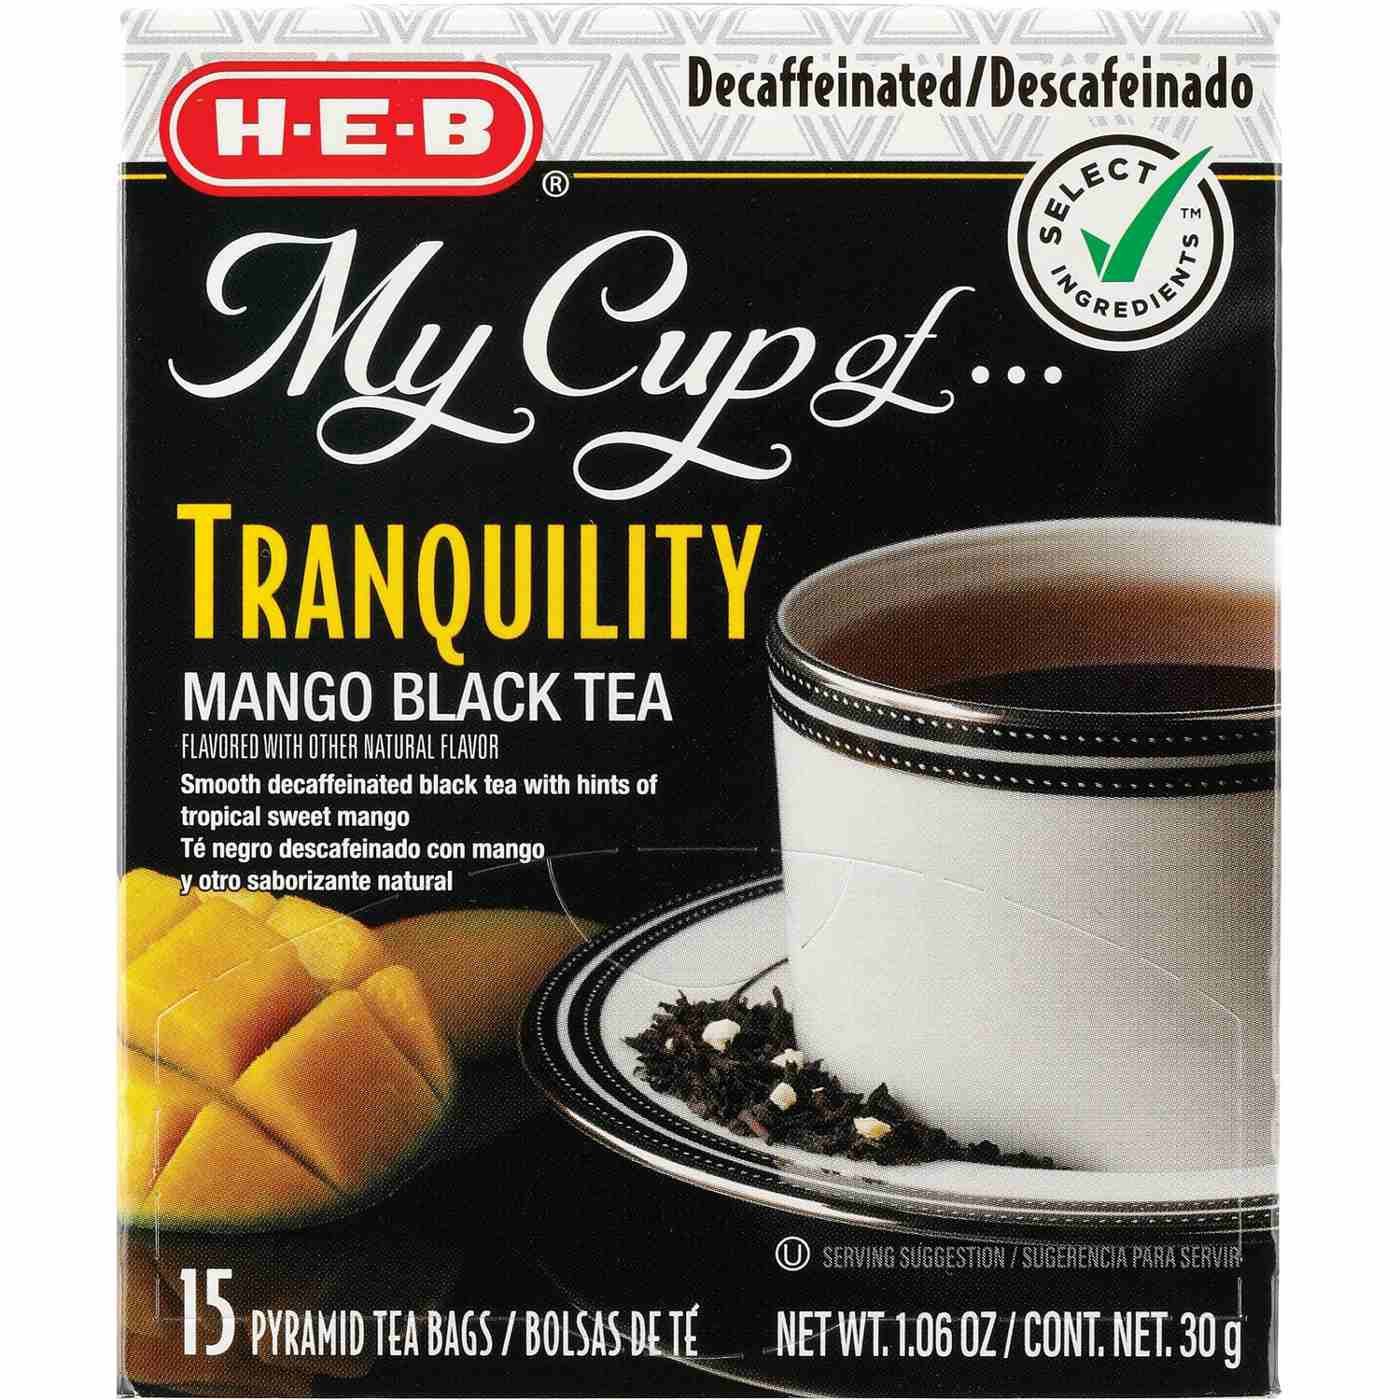 H-E-B My Cup of Tranquility Decaffeinated Mango Black Tea, Pyramid Tea Bags; image 1 of 2